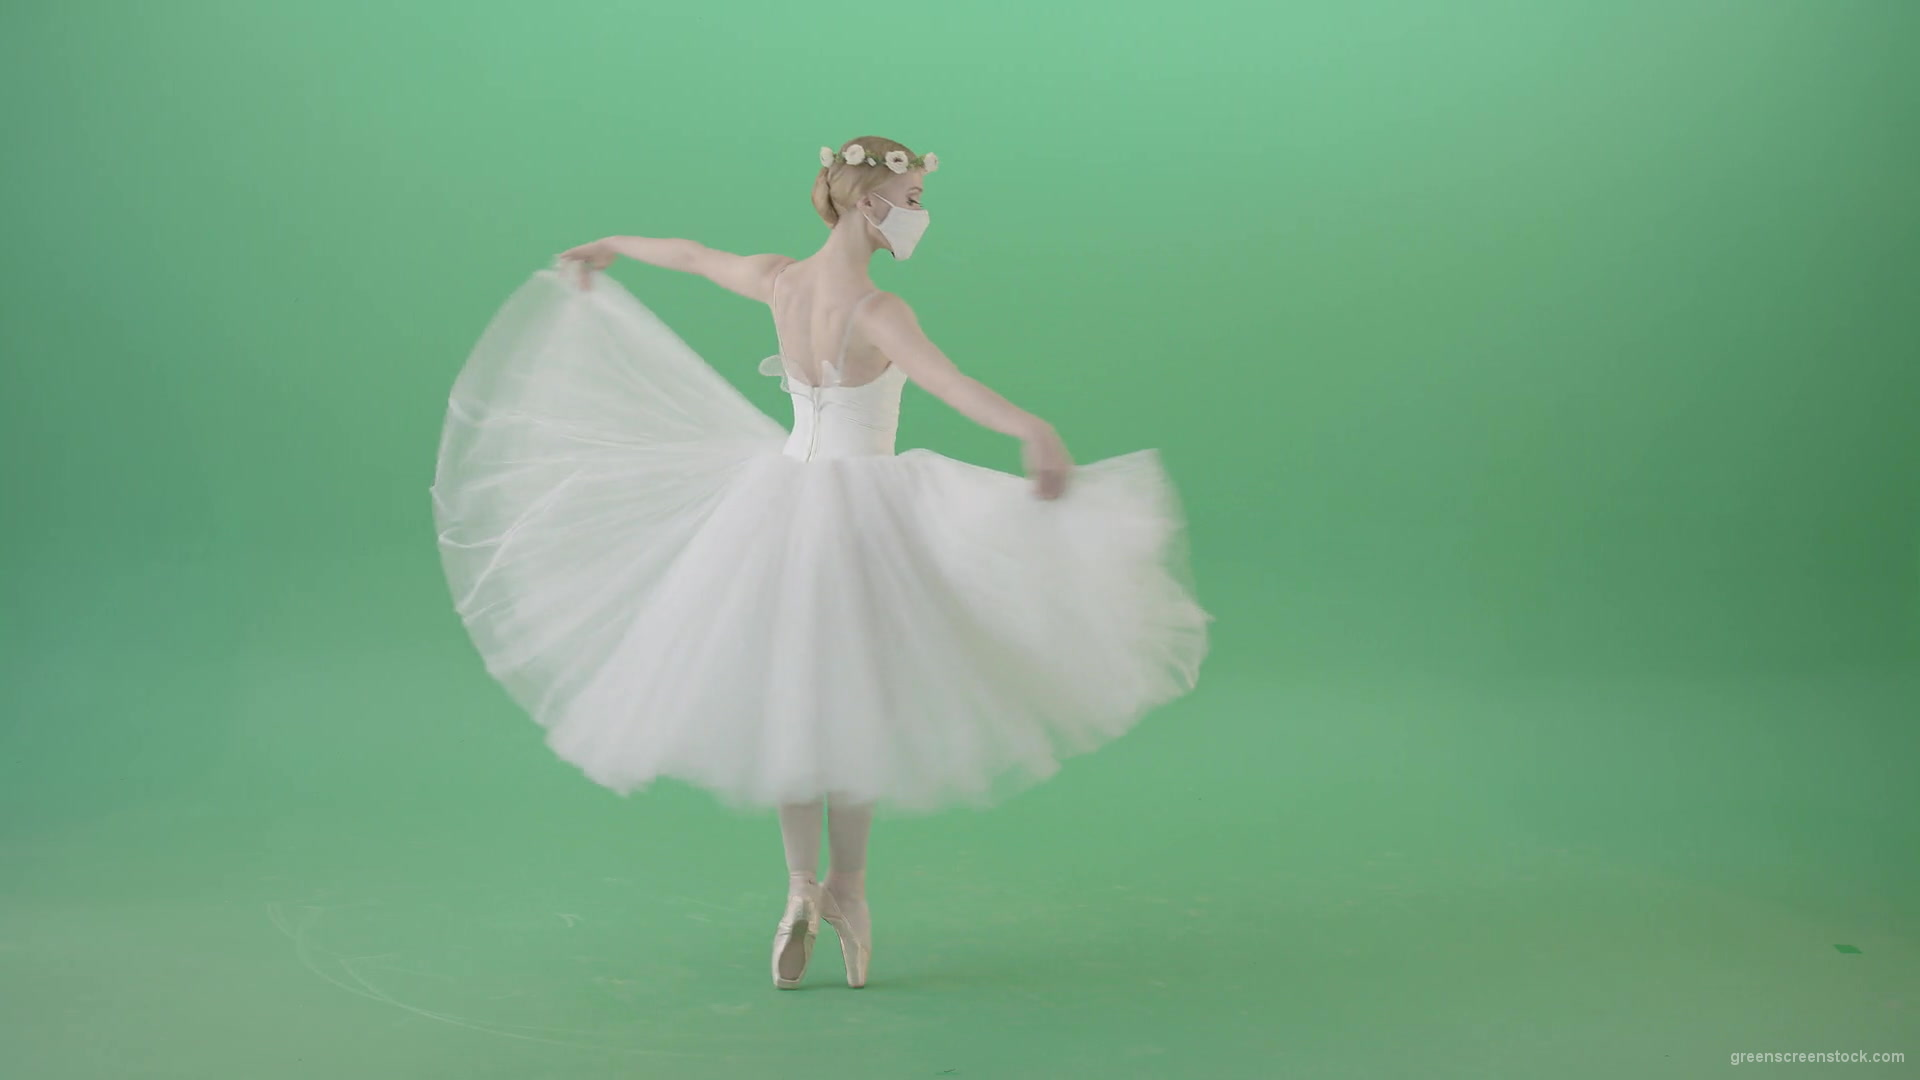 Ballet-Dancing-Girl-in-Corona-Virus-Mask-spinning-on-green-screen-4K-Video-Footage-1920_008 Green Screen Stock